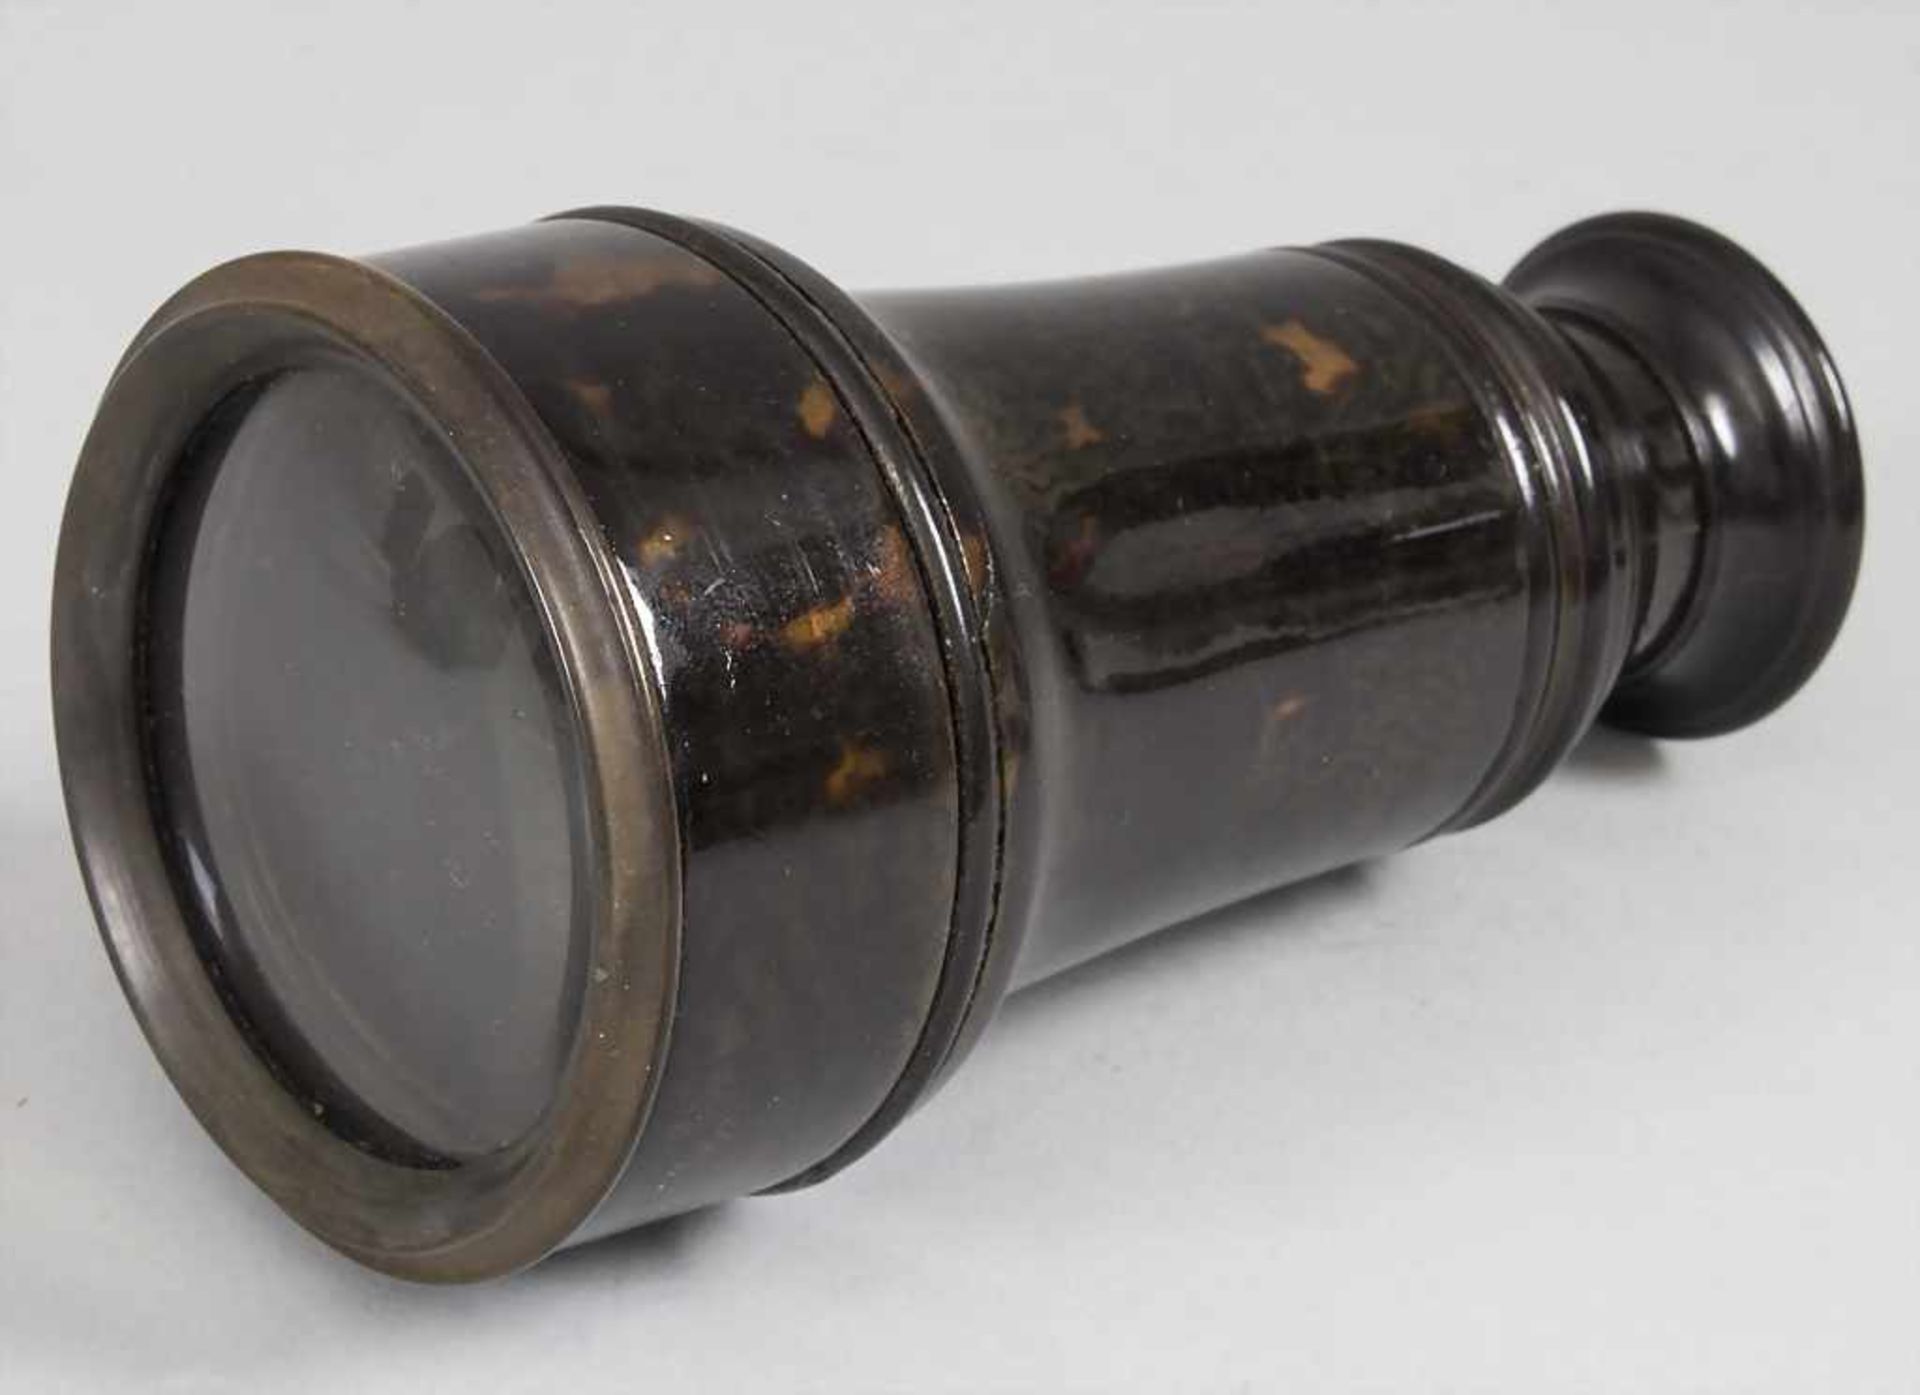 Gr. Monokular / A spy glass, S. Pössl, Hof Optiker, Wien, um 1840Material: Schildpatt